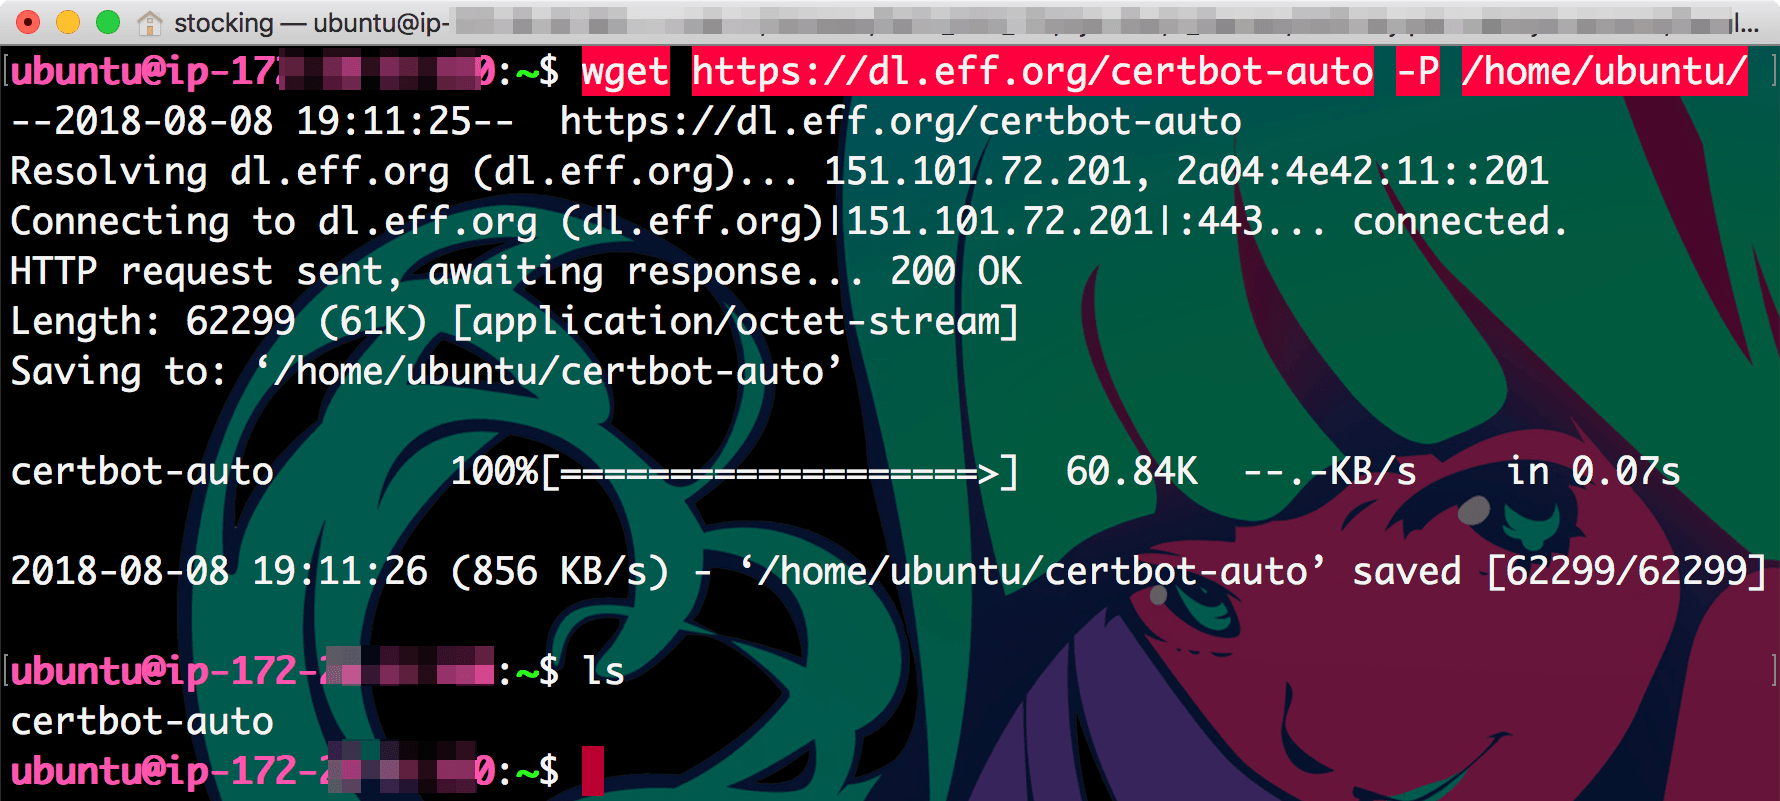 wget 리눅스 명령어를 이용해 certbot-auto 다운로드 완료 - certbot-auto saved